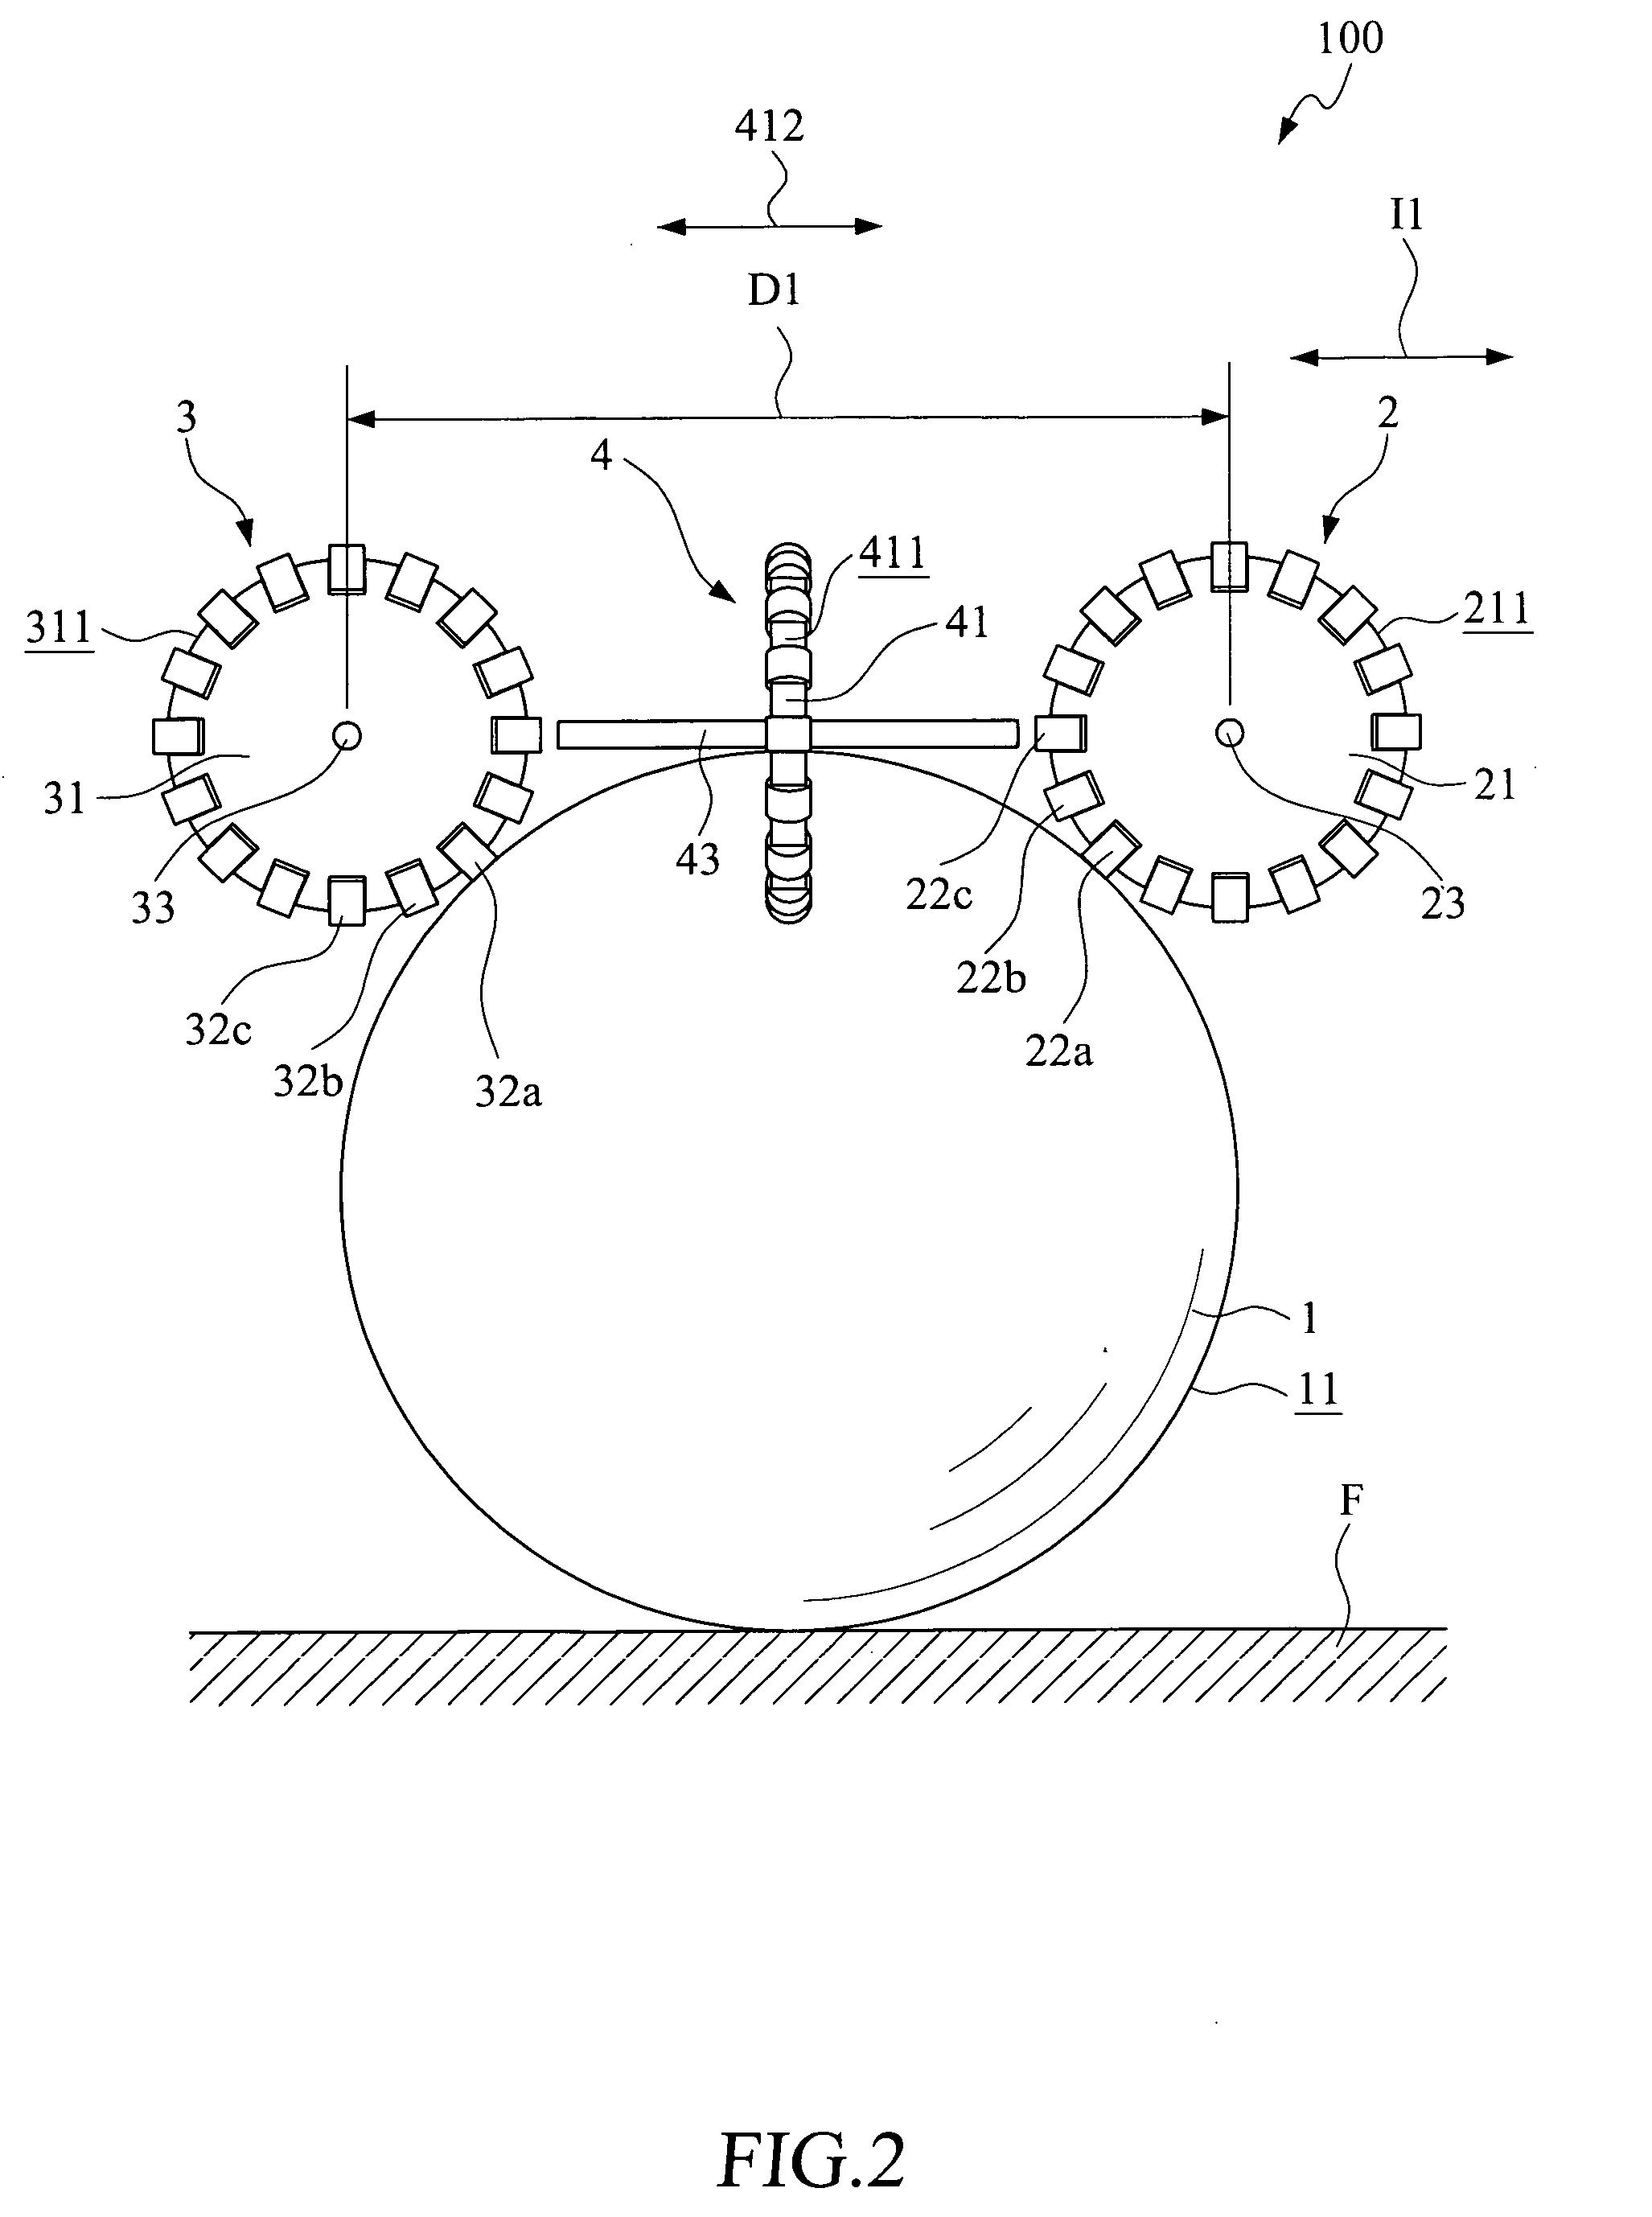 Omni-wheel based drive mechanism